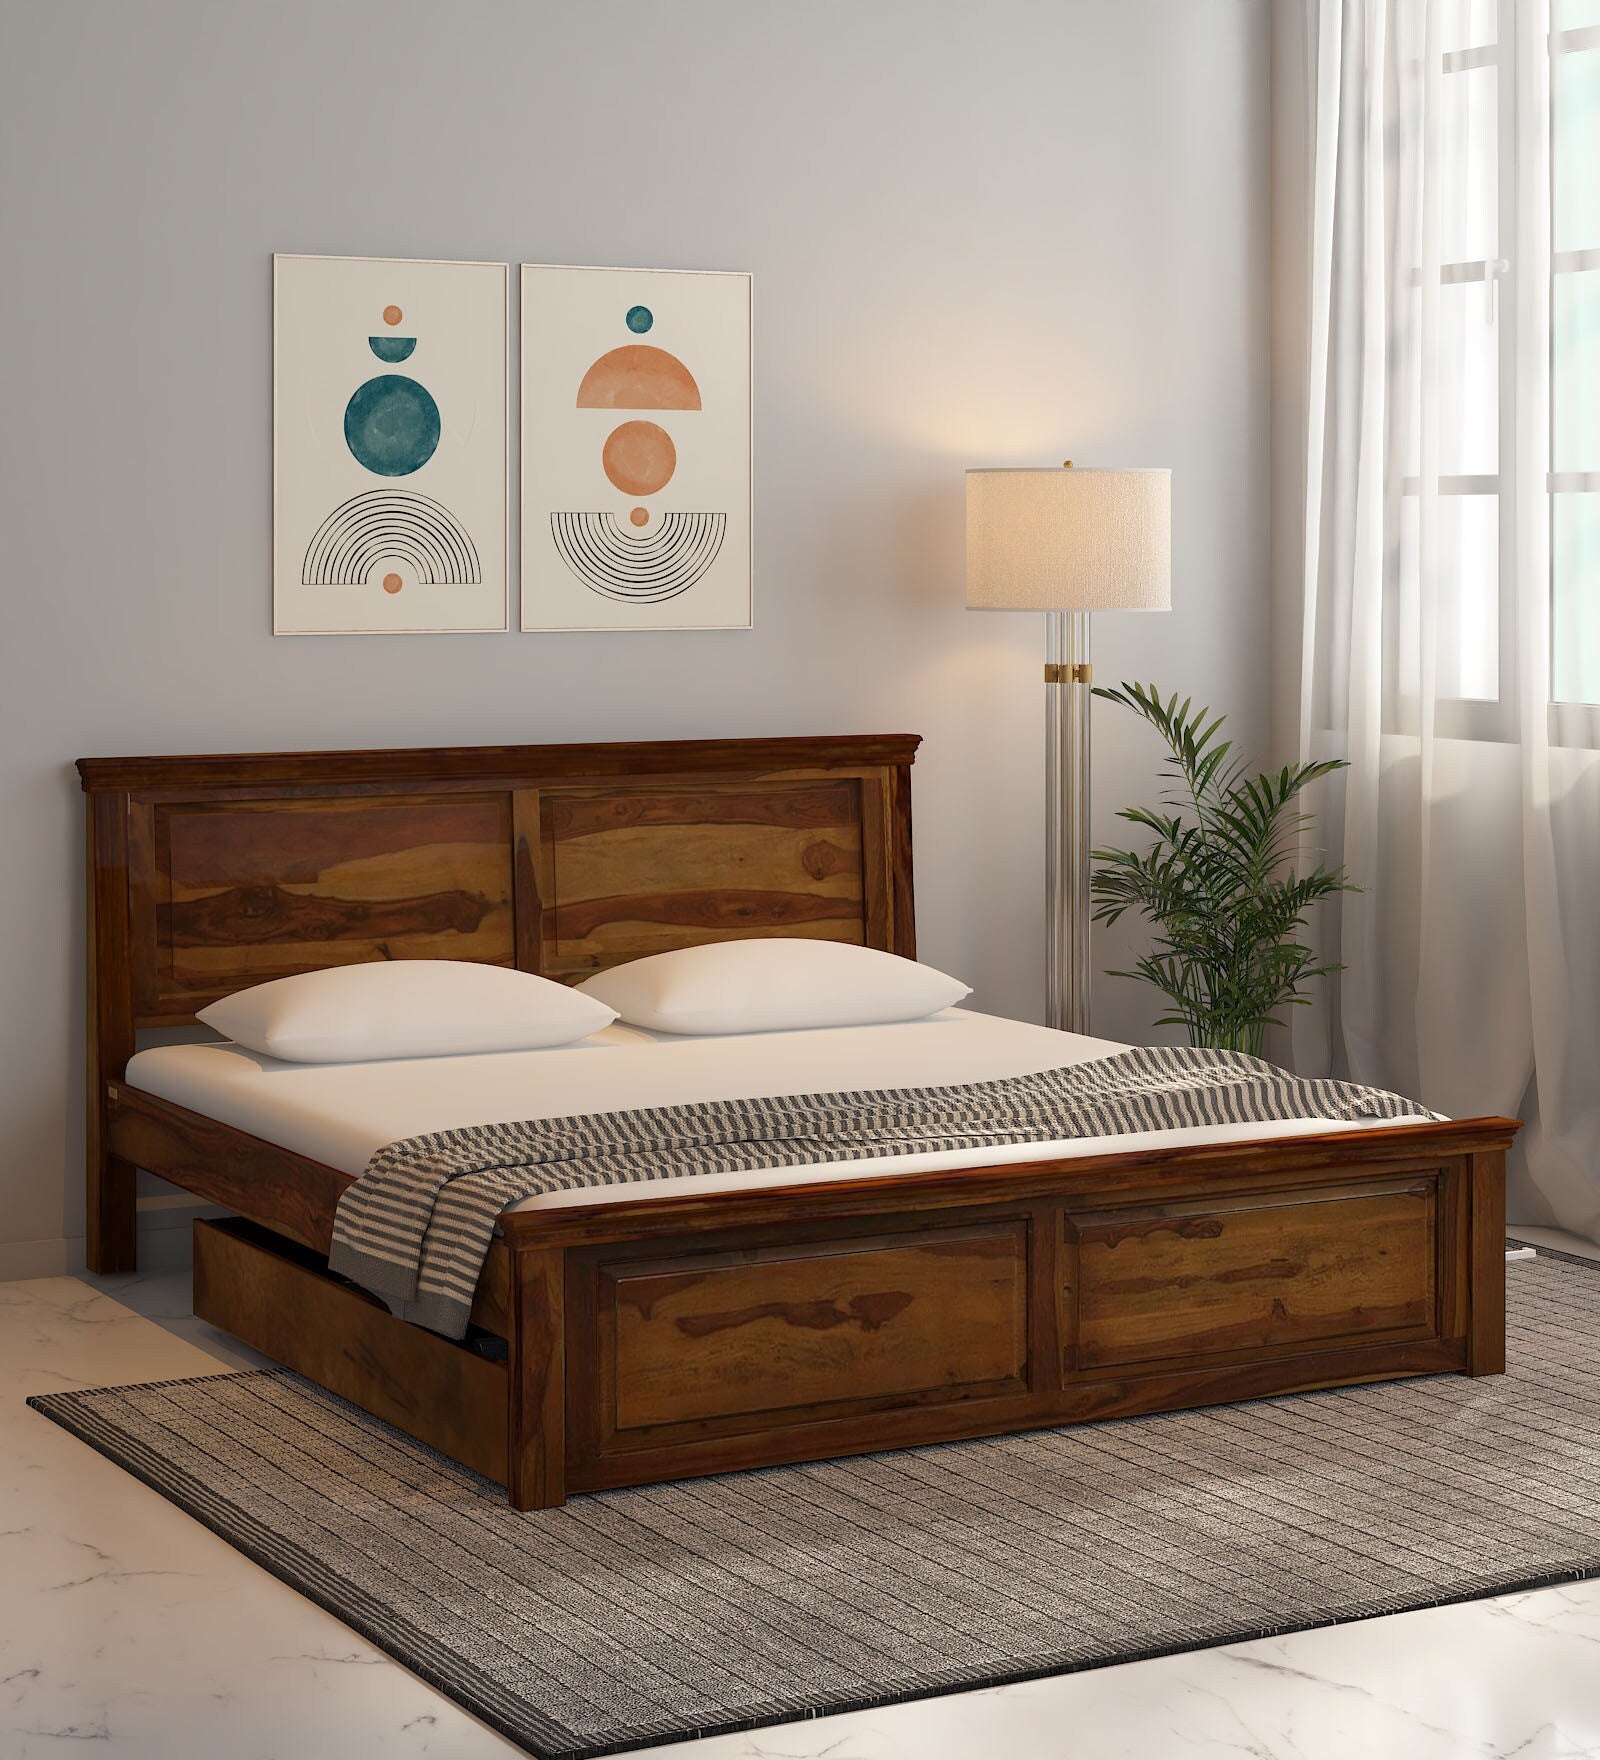 Vandena Solid Wood Bed With Drawer Storage In Provincial Teak Finish By Rajwada - Rajwada Furnish